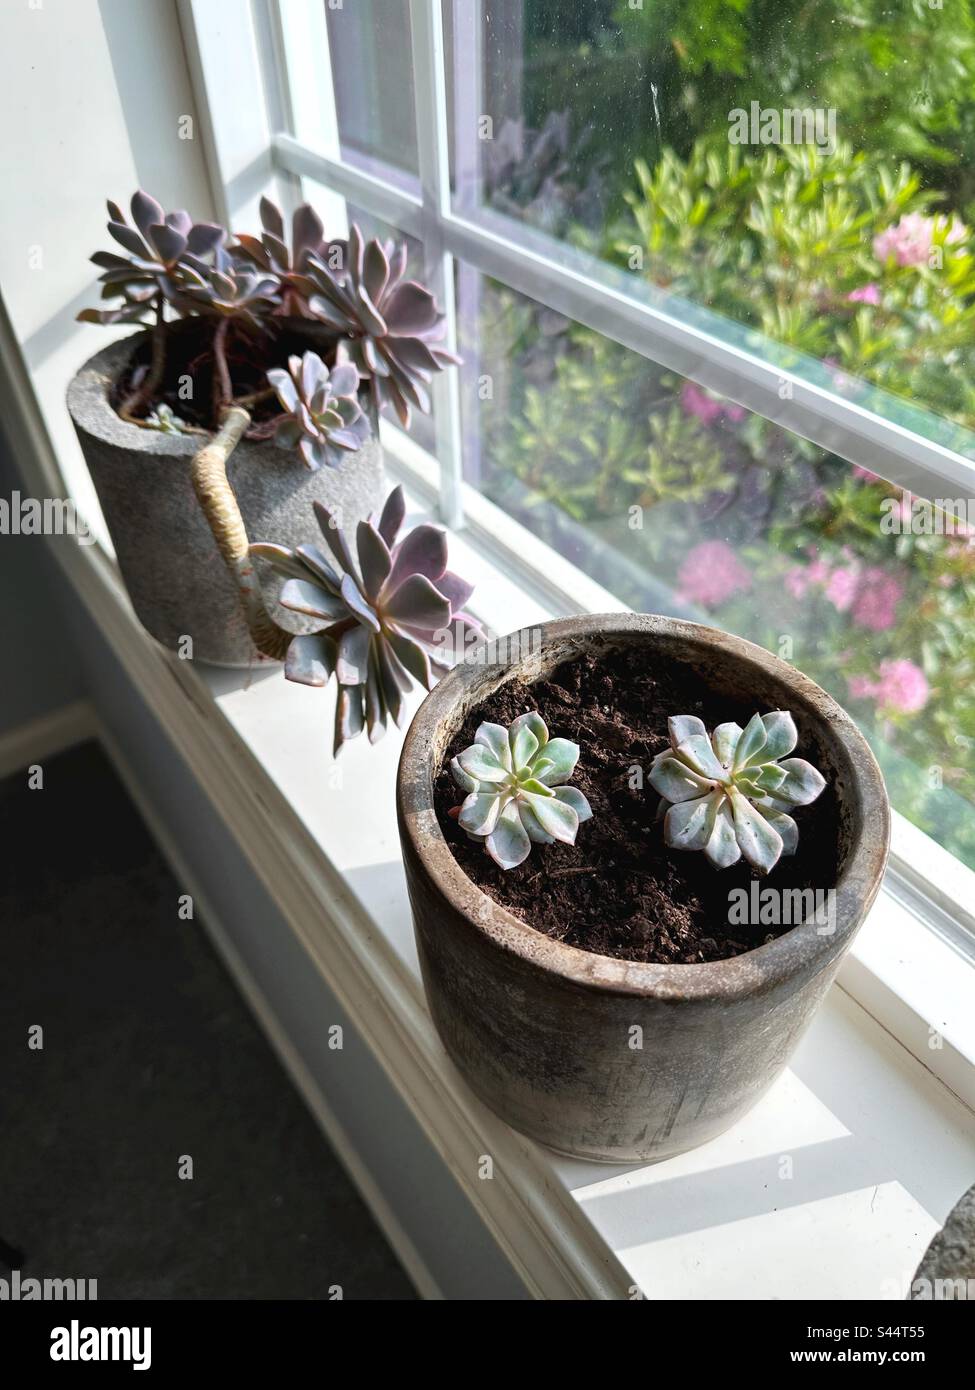 Echeveria plants on a window sill. Stock Photo